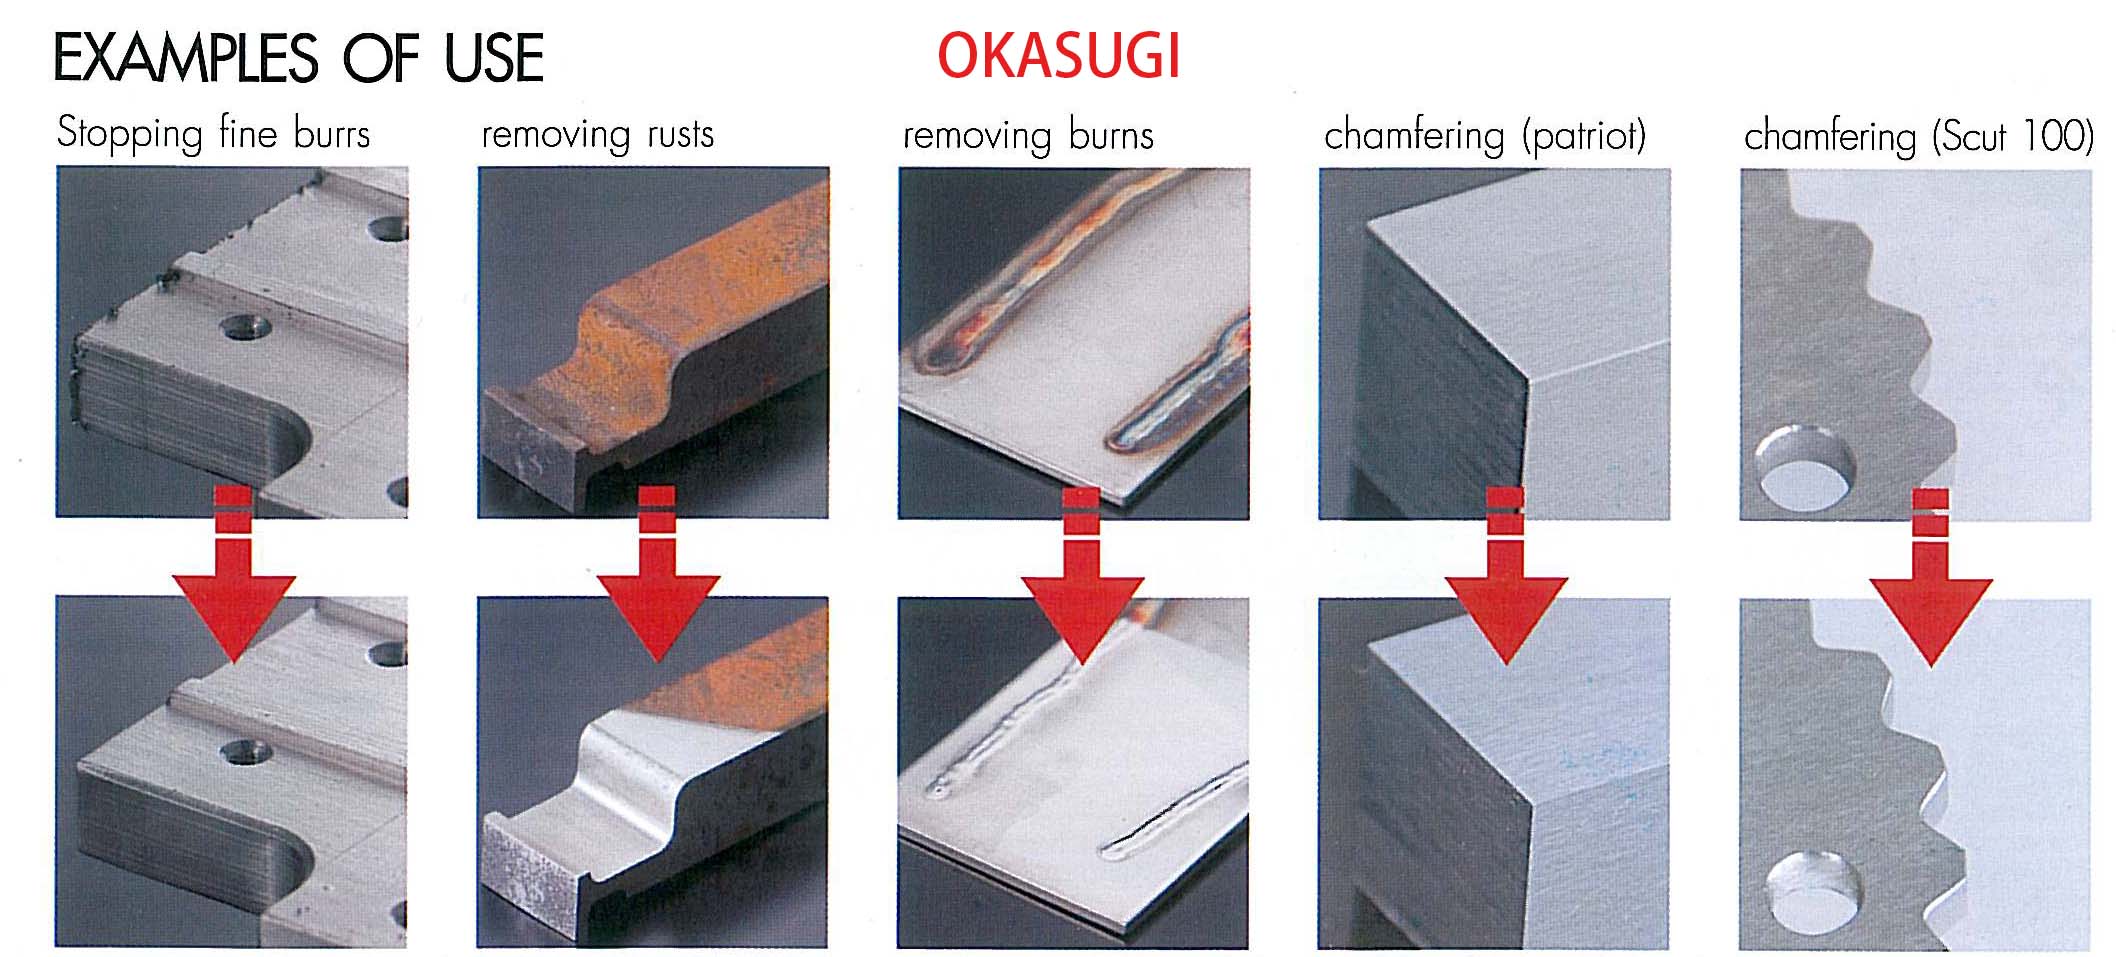 OKASUGI EXAMPLES OF USE